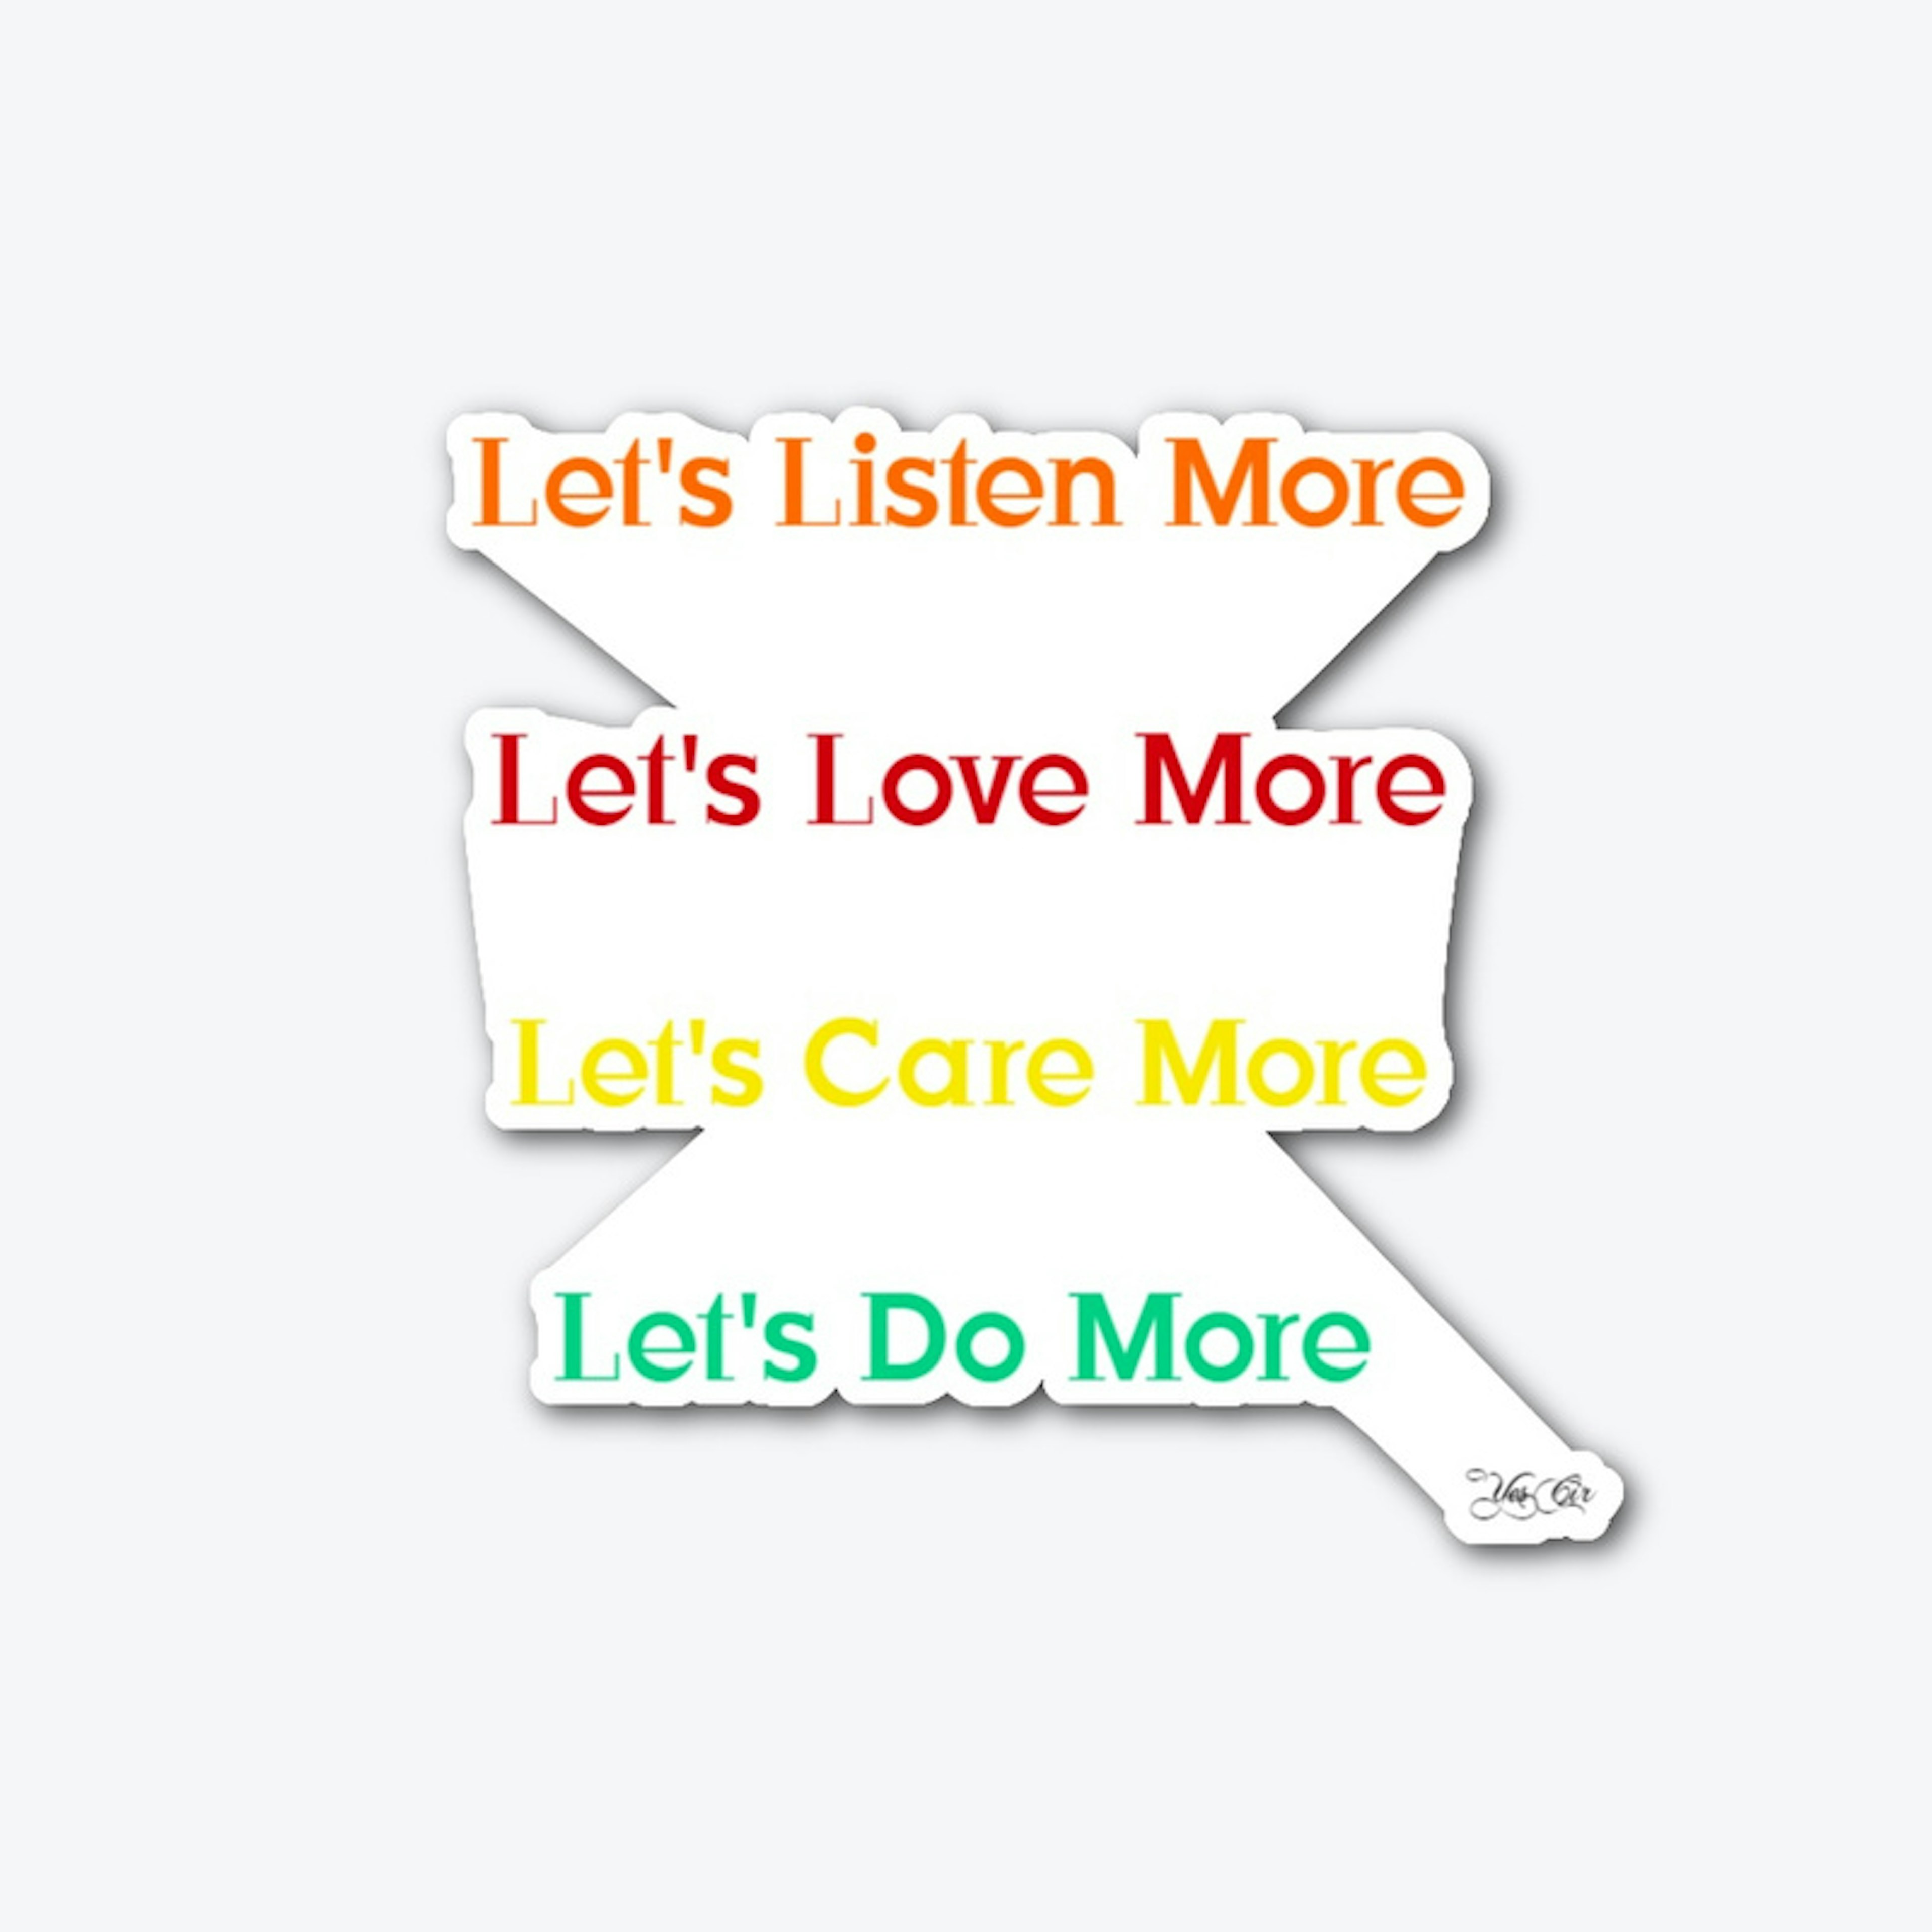 Listen, Love, Care Do More!